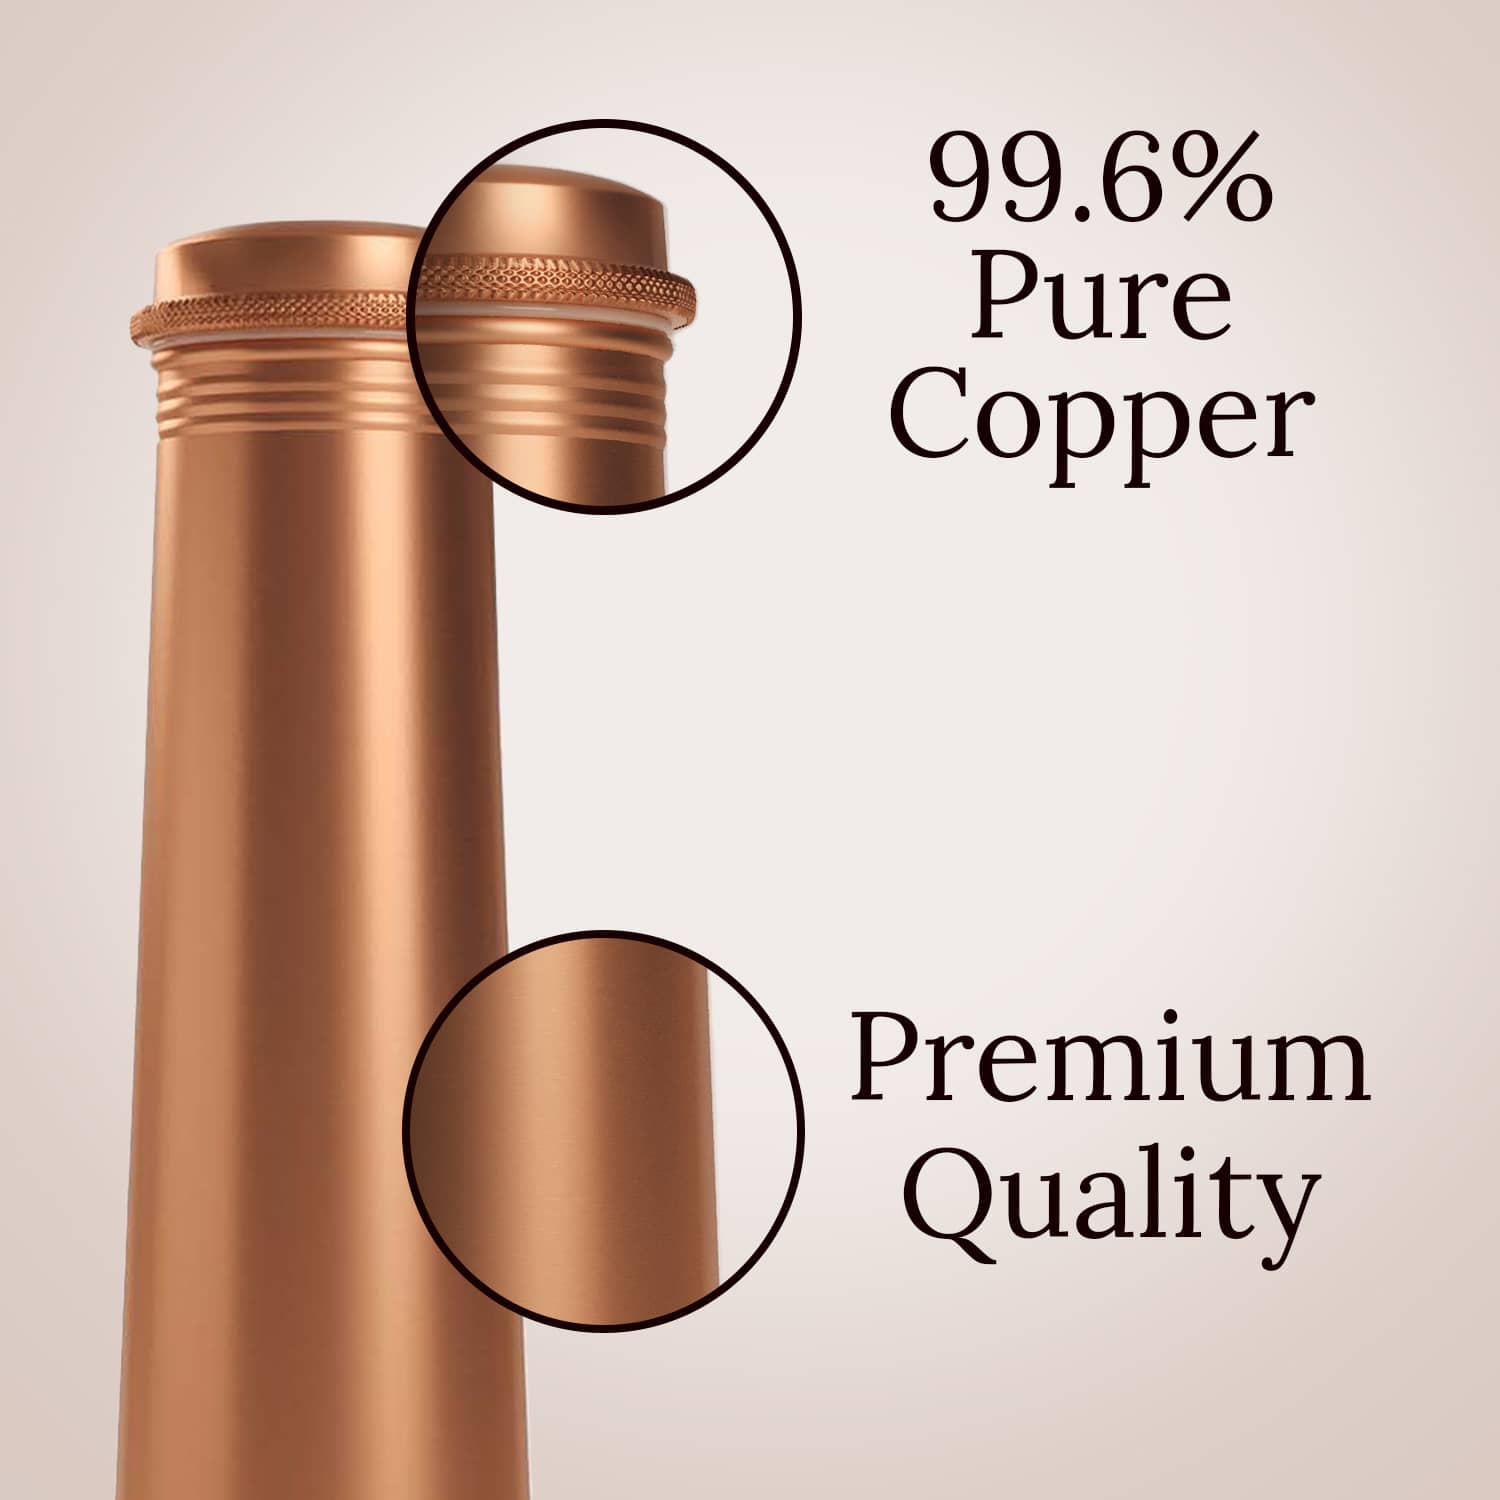 om laser etched pure copper water bottle 750ml slim #style_om